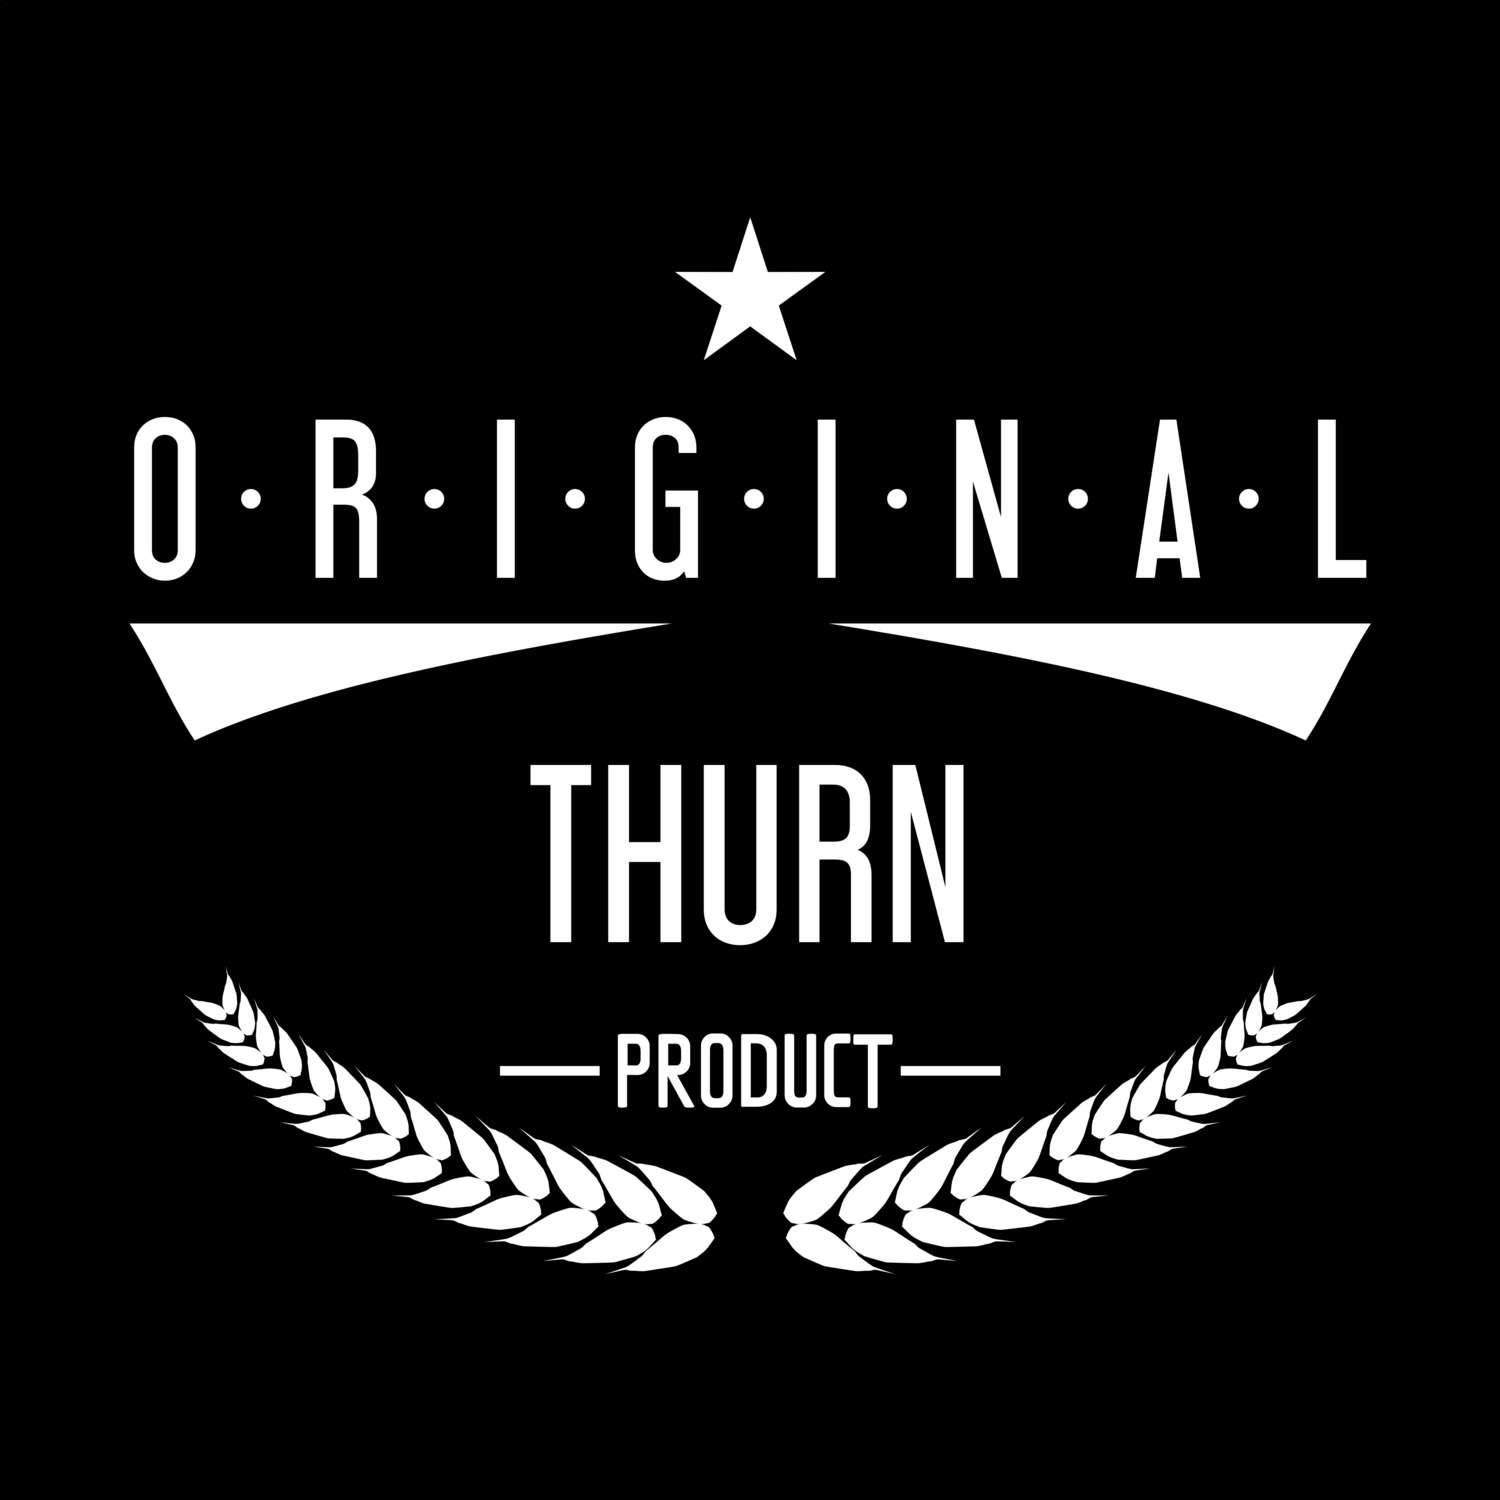 Thurn T-Shirt »Original Product«